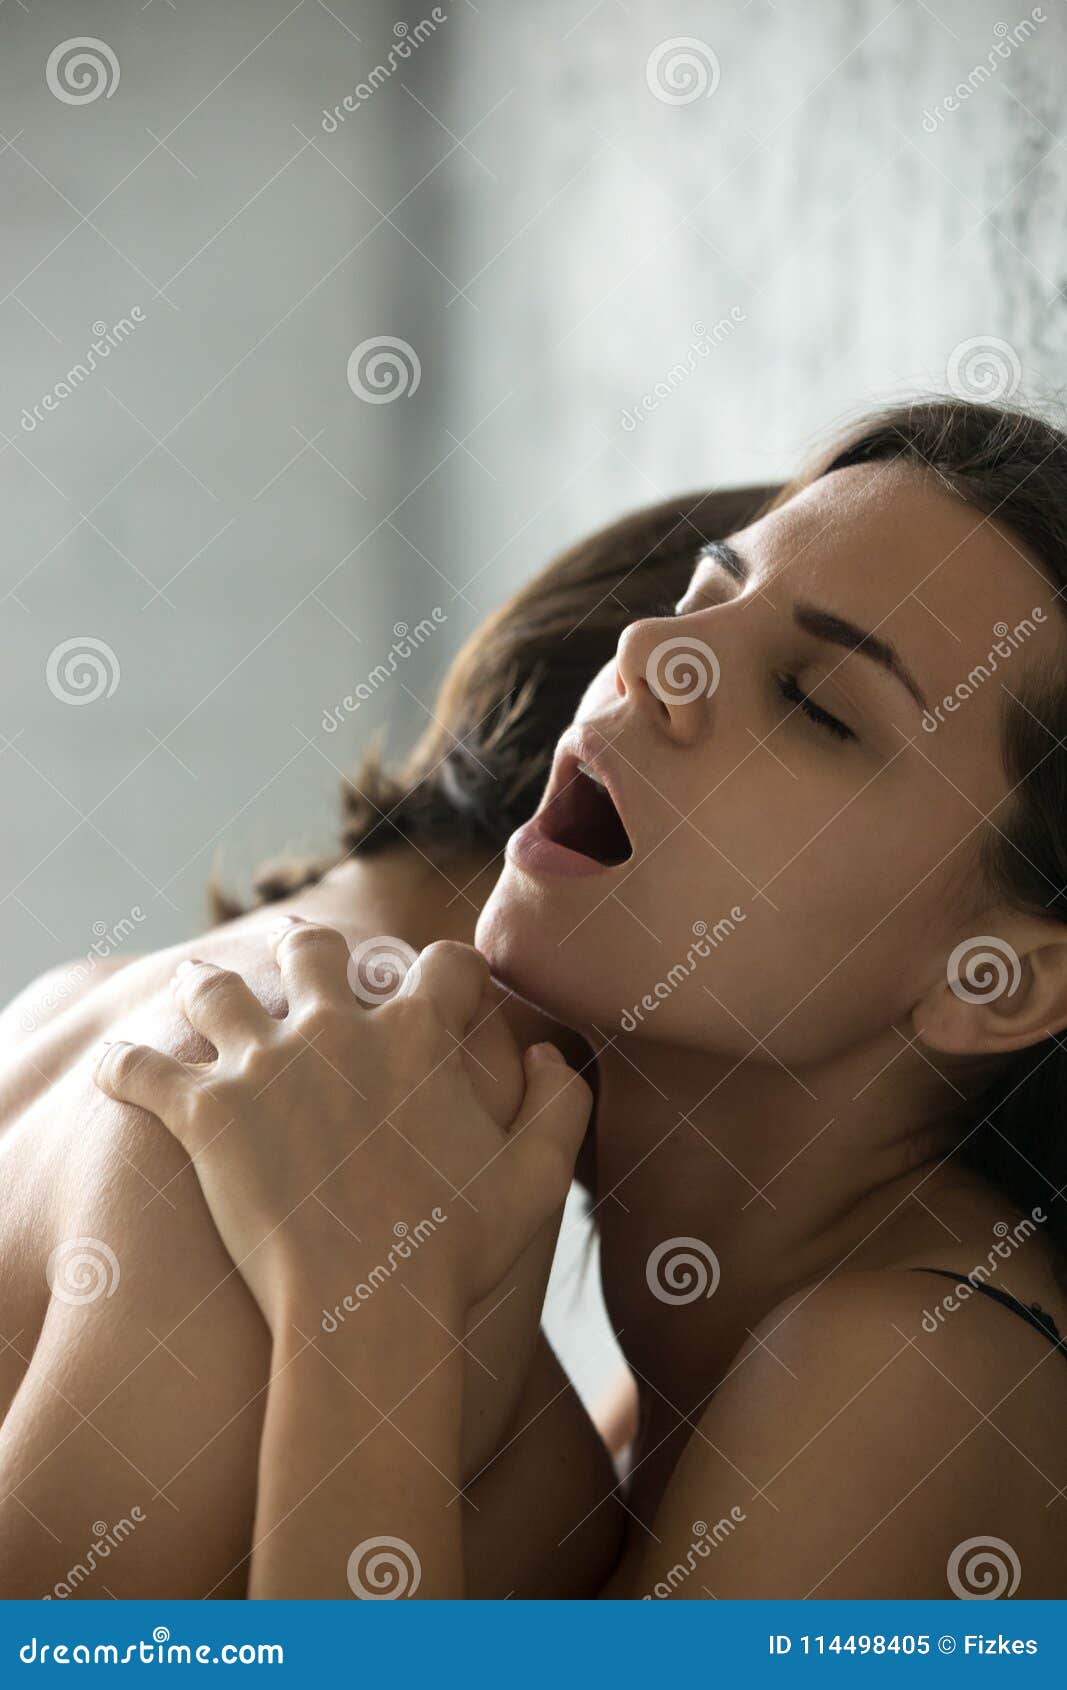 Passionate Sensual Woman Moaning Feeling Pleasure Having Sex, Ve Stock Image